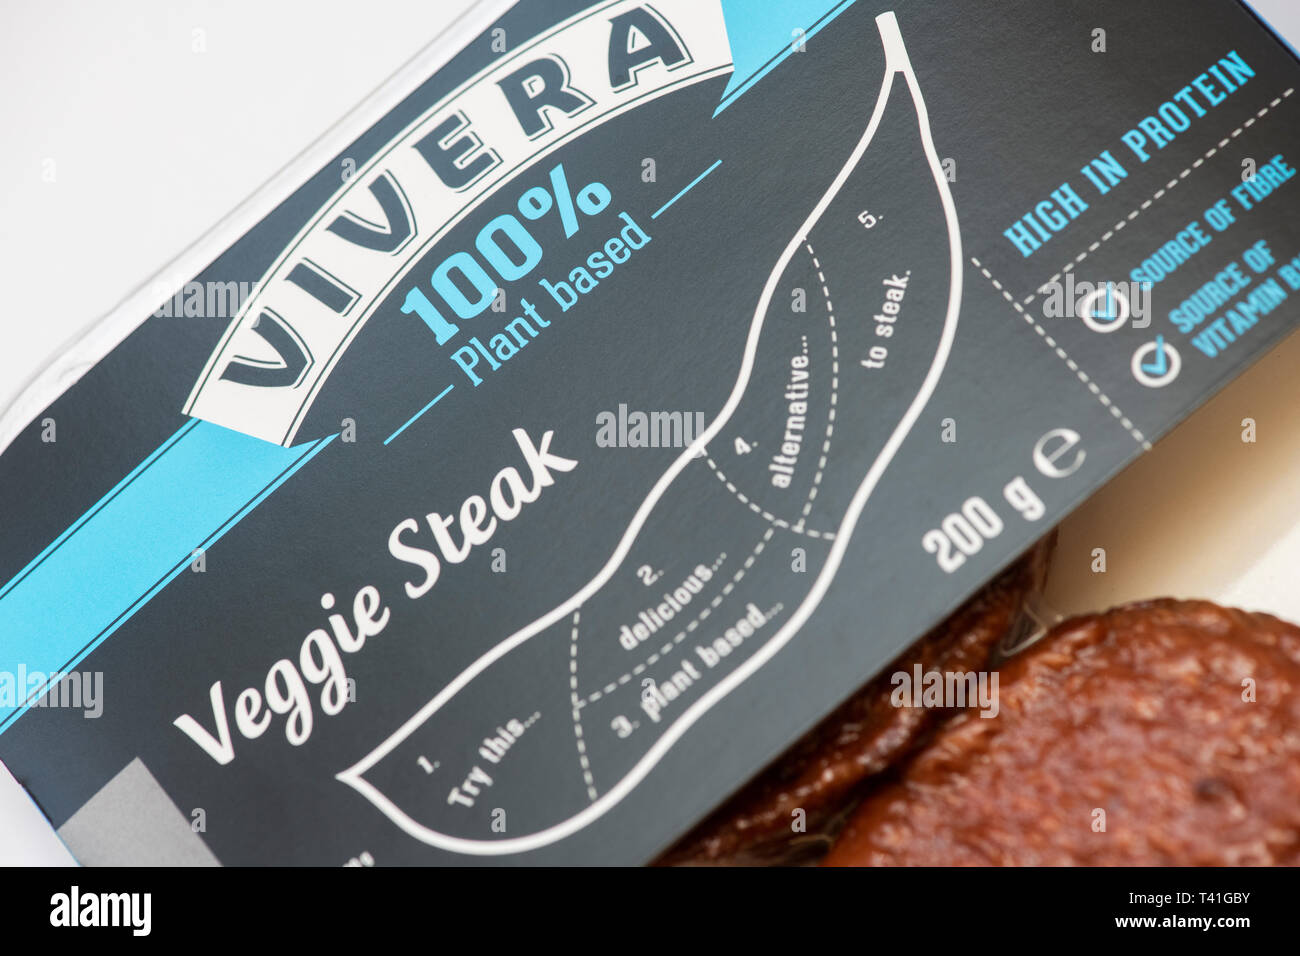 Vivera veggie steak packet with vegan plant based label. UK Stock Photo